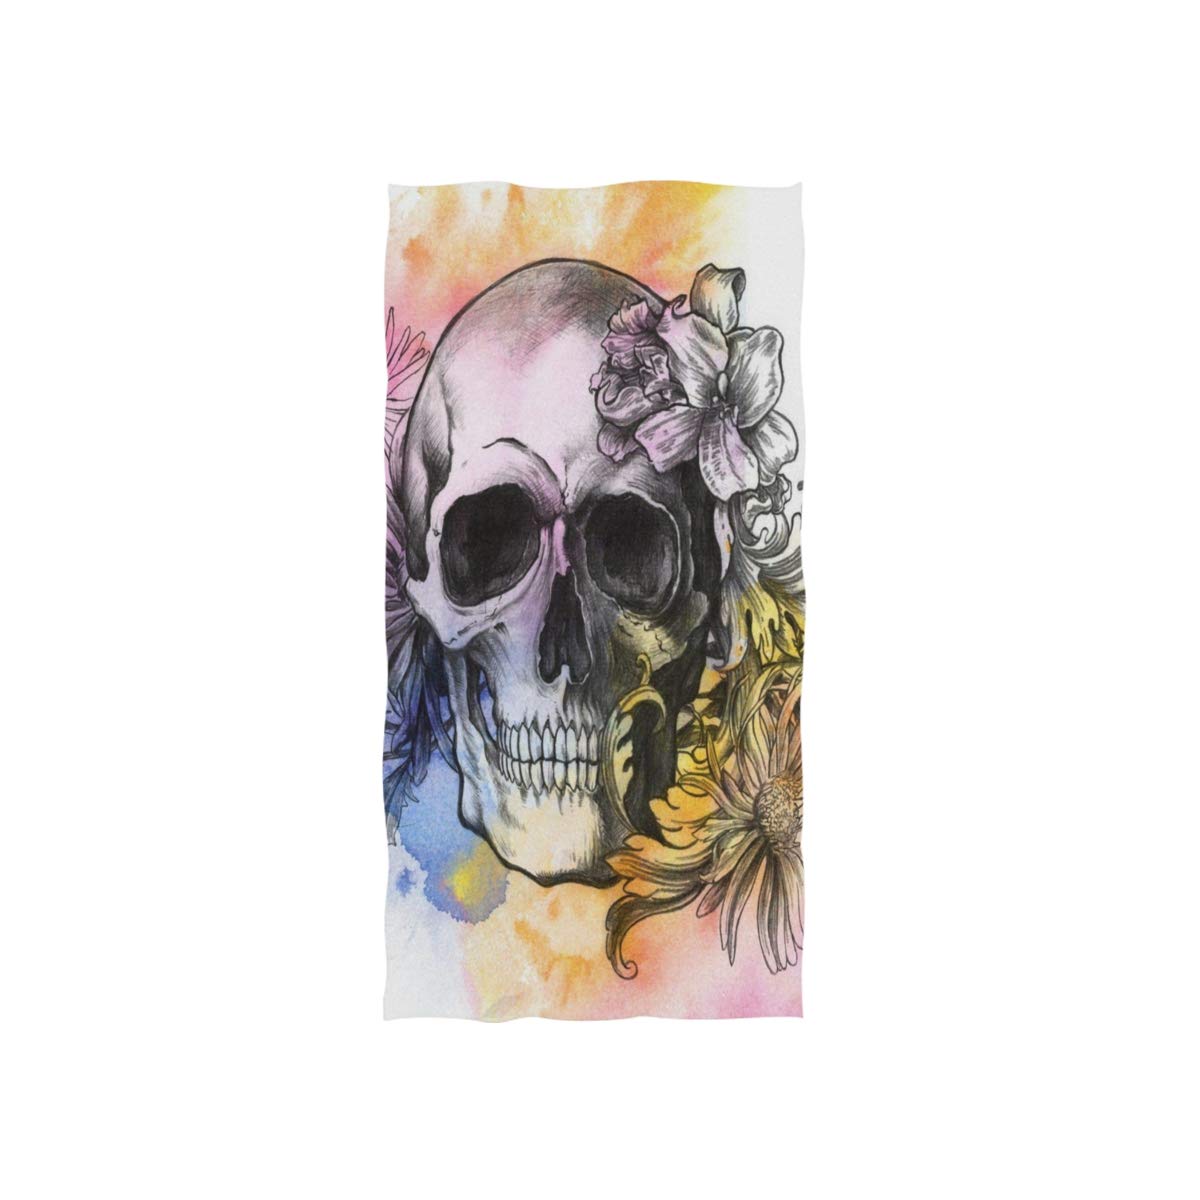 Alexander Mcqueen Skull Drawings - HD Wallpaper 